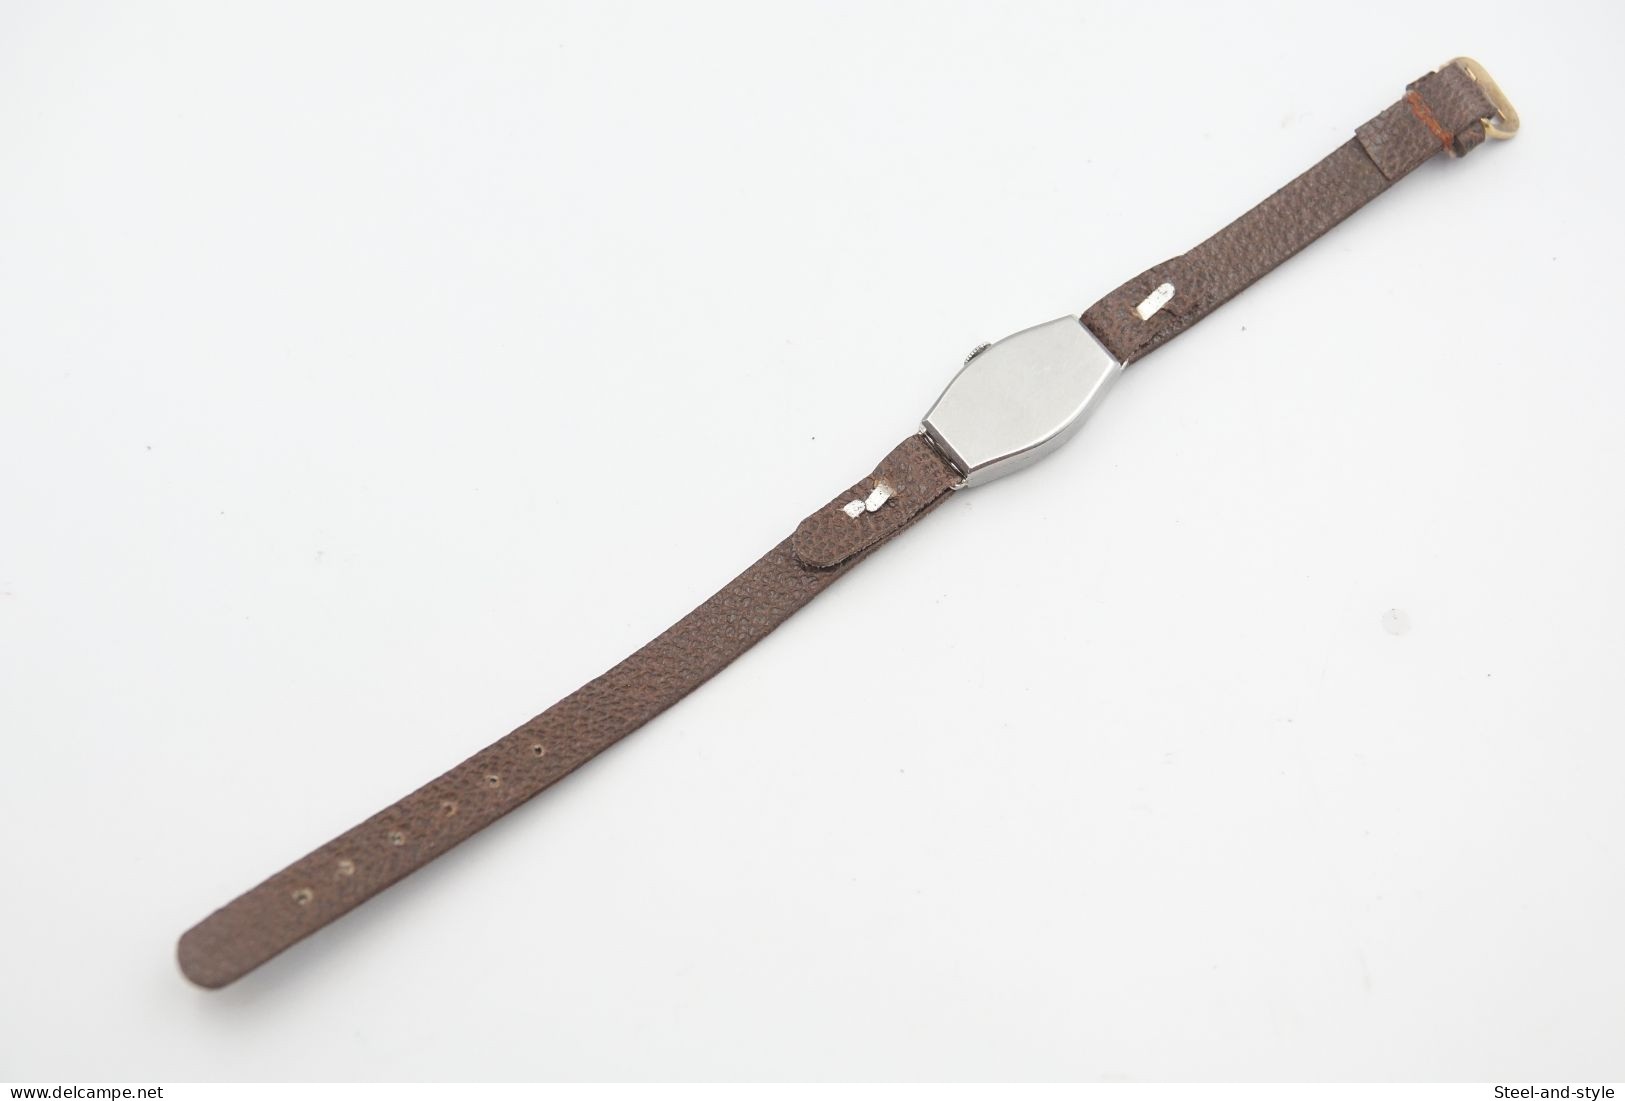 Watches : OMEGA TONNEAU CUSHION TANK LADIES MECHANICAL Ref. 8165095 -  1930's - Original - Running - Excelent - Art Deco - Orologi Di Lusso